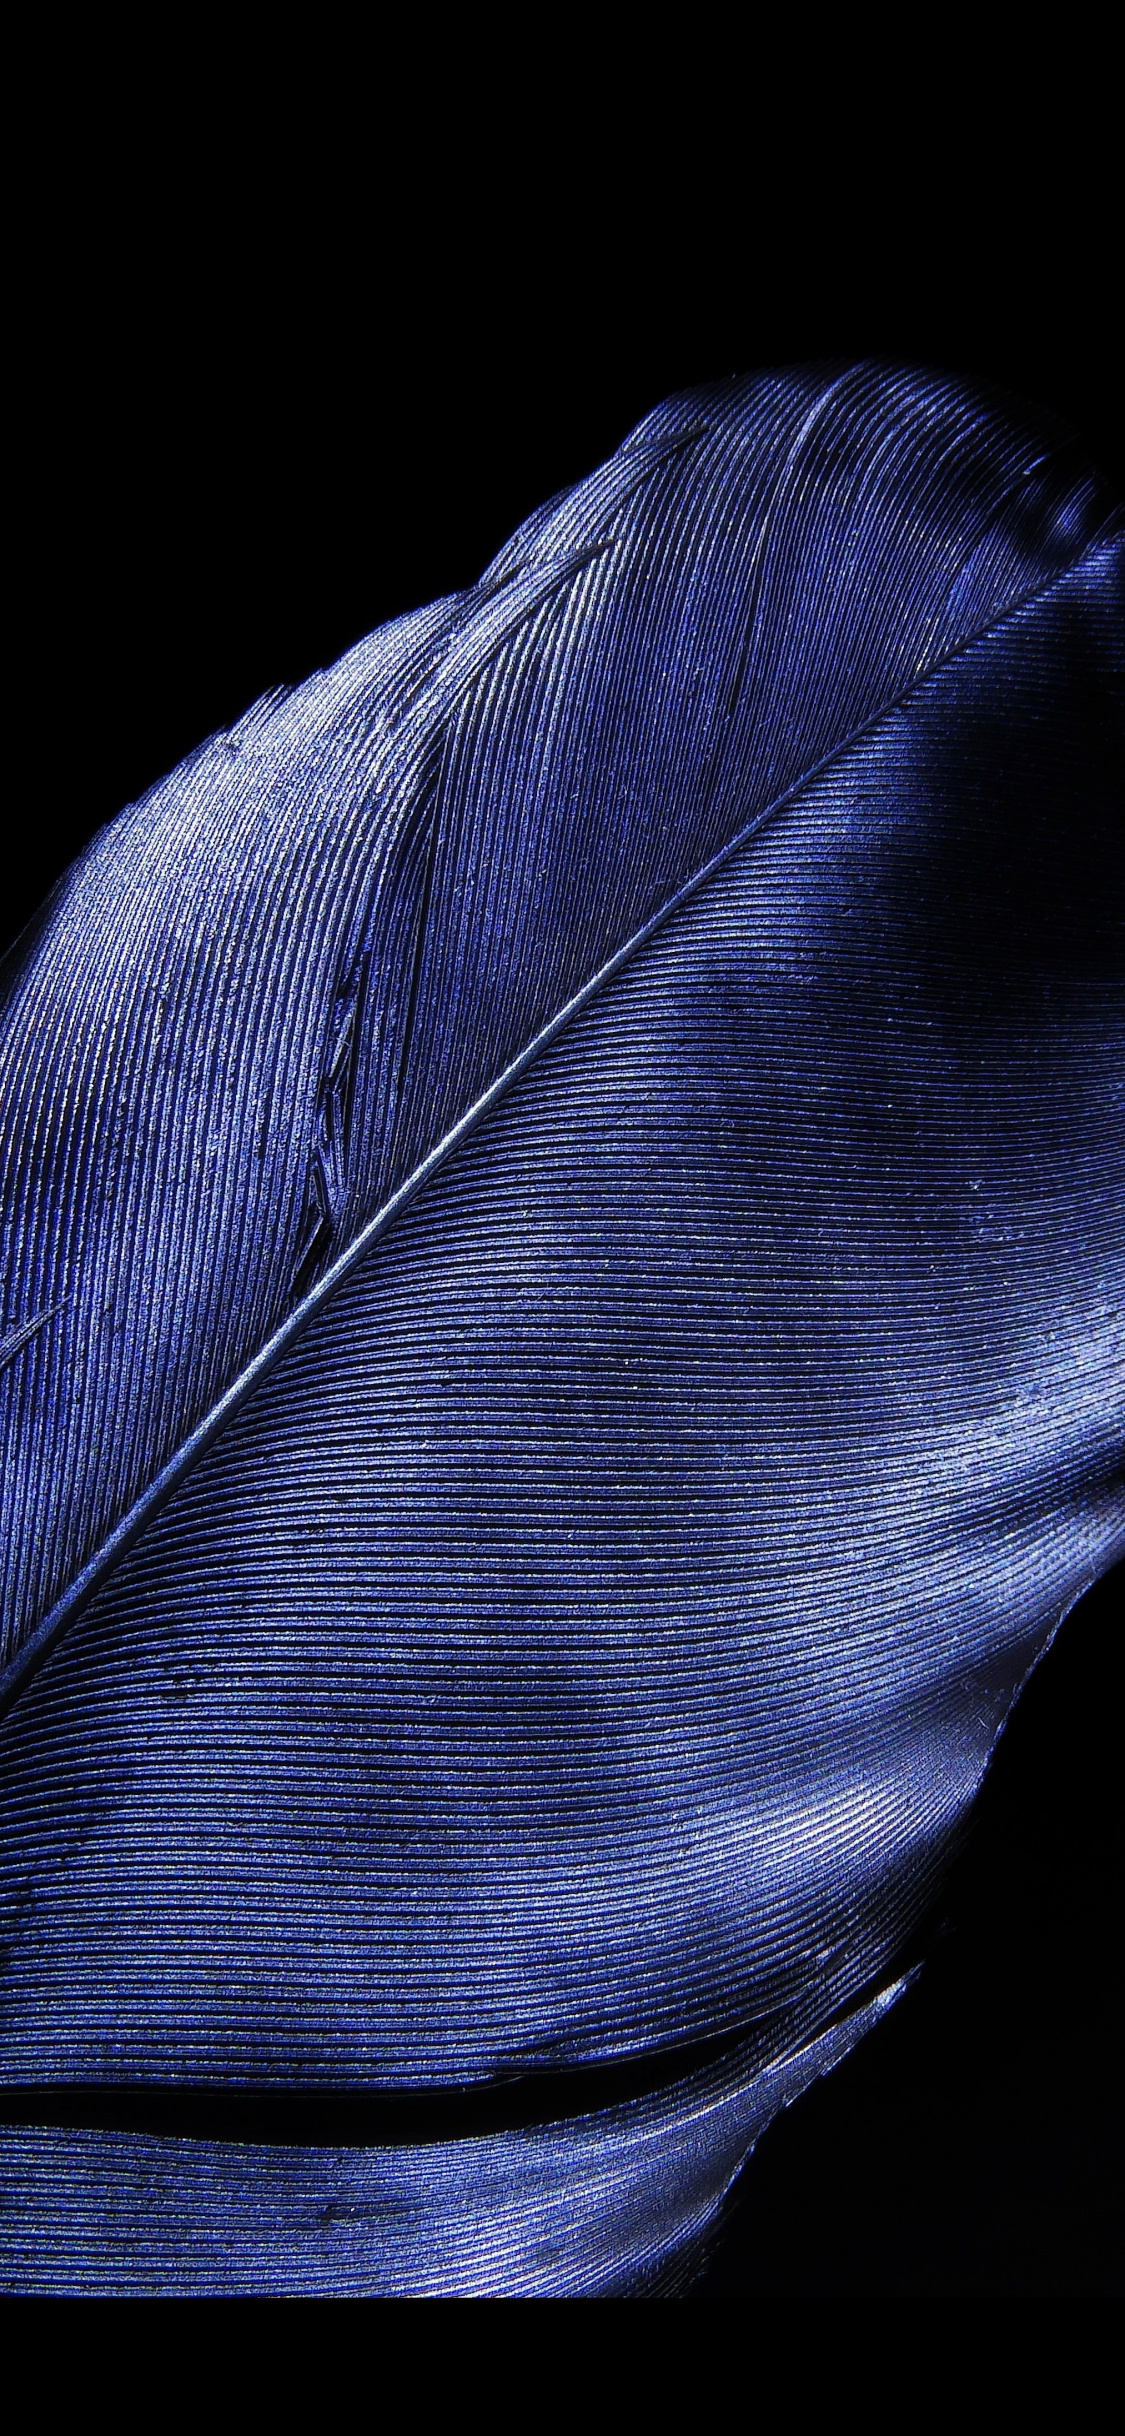 Download 1125x2436 wallpaper leaf, feather, blue, dark black